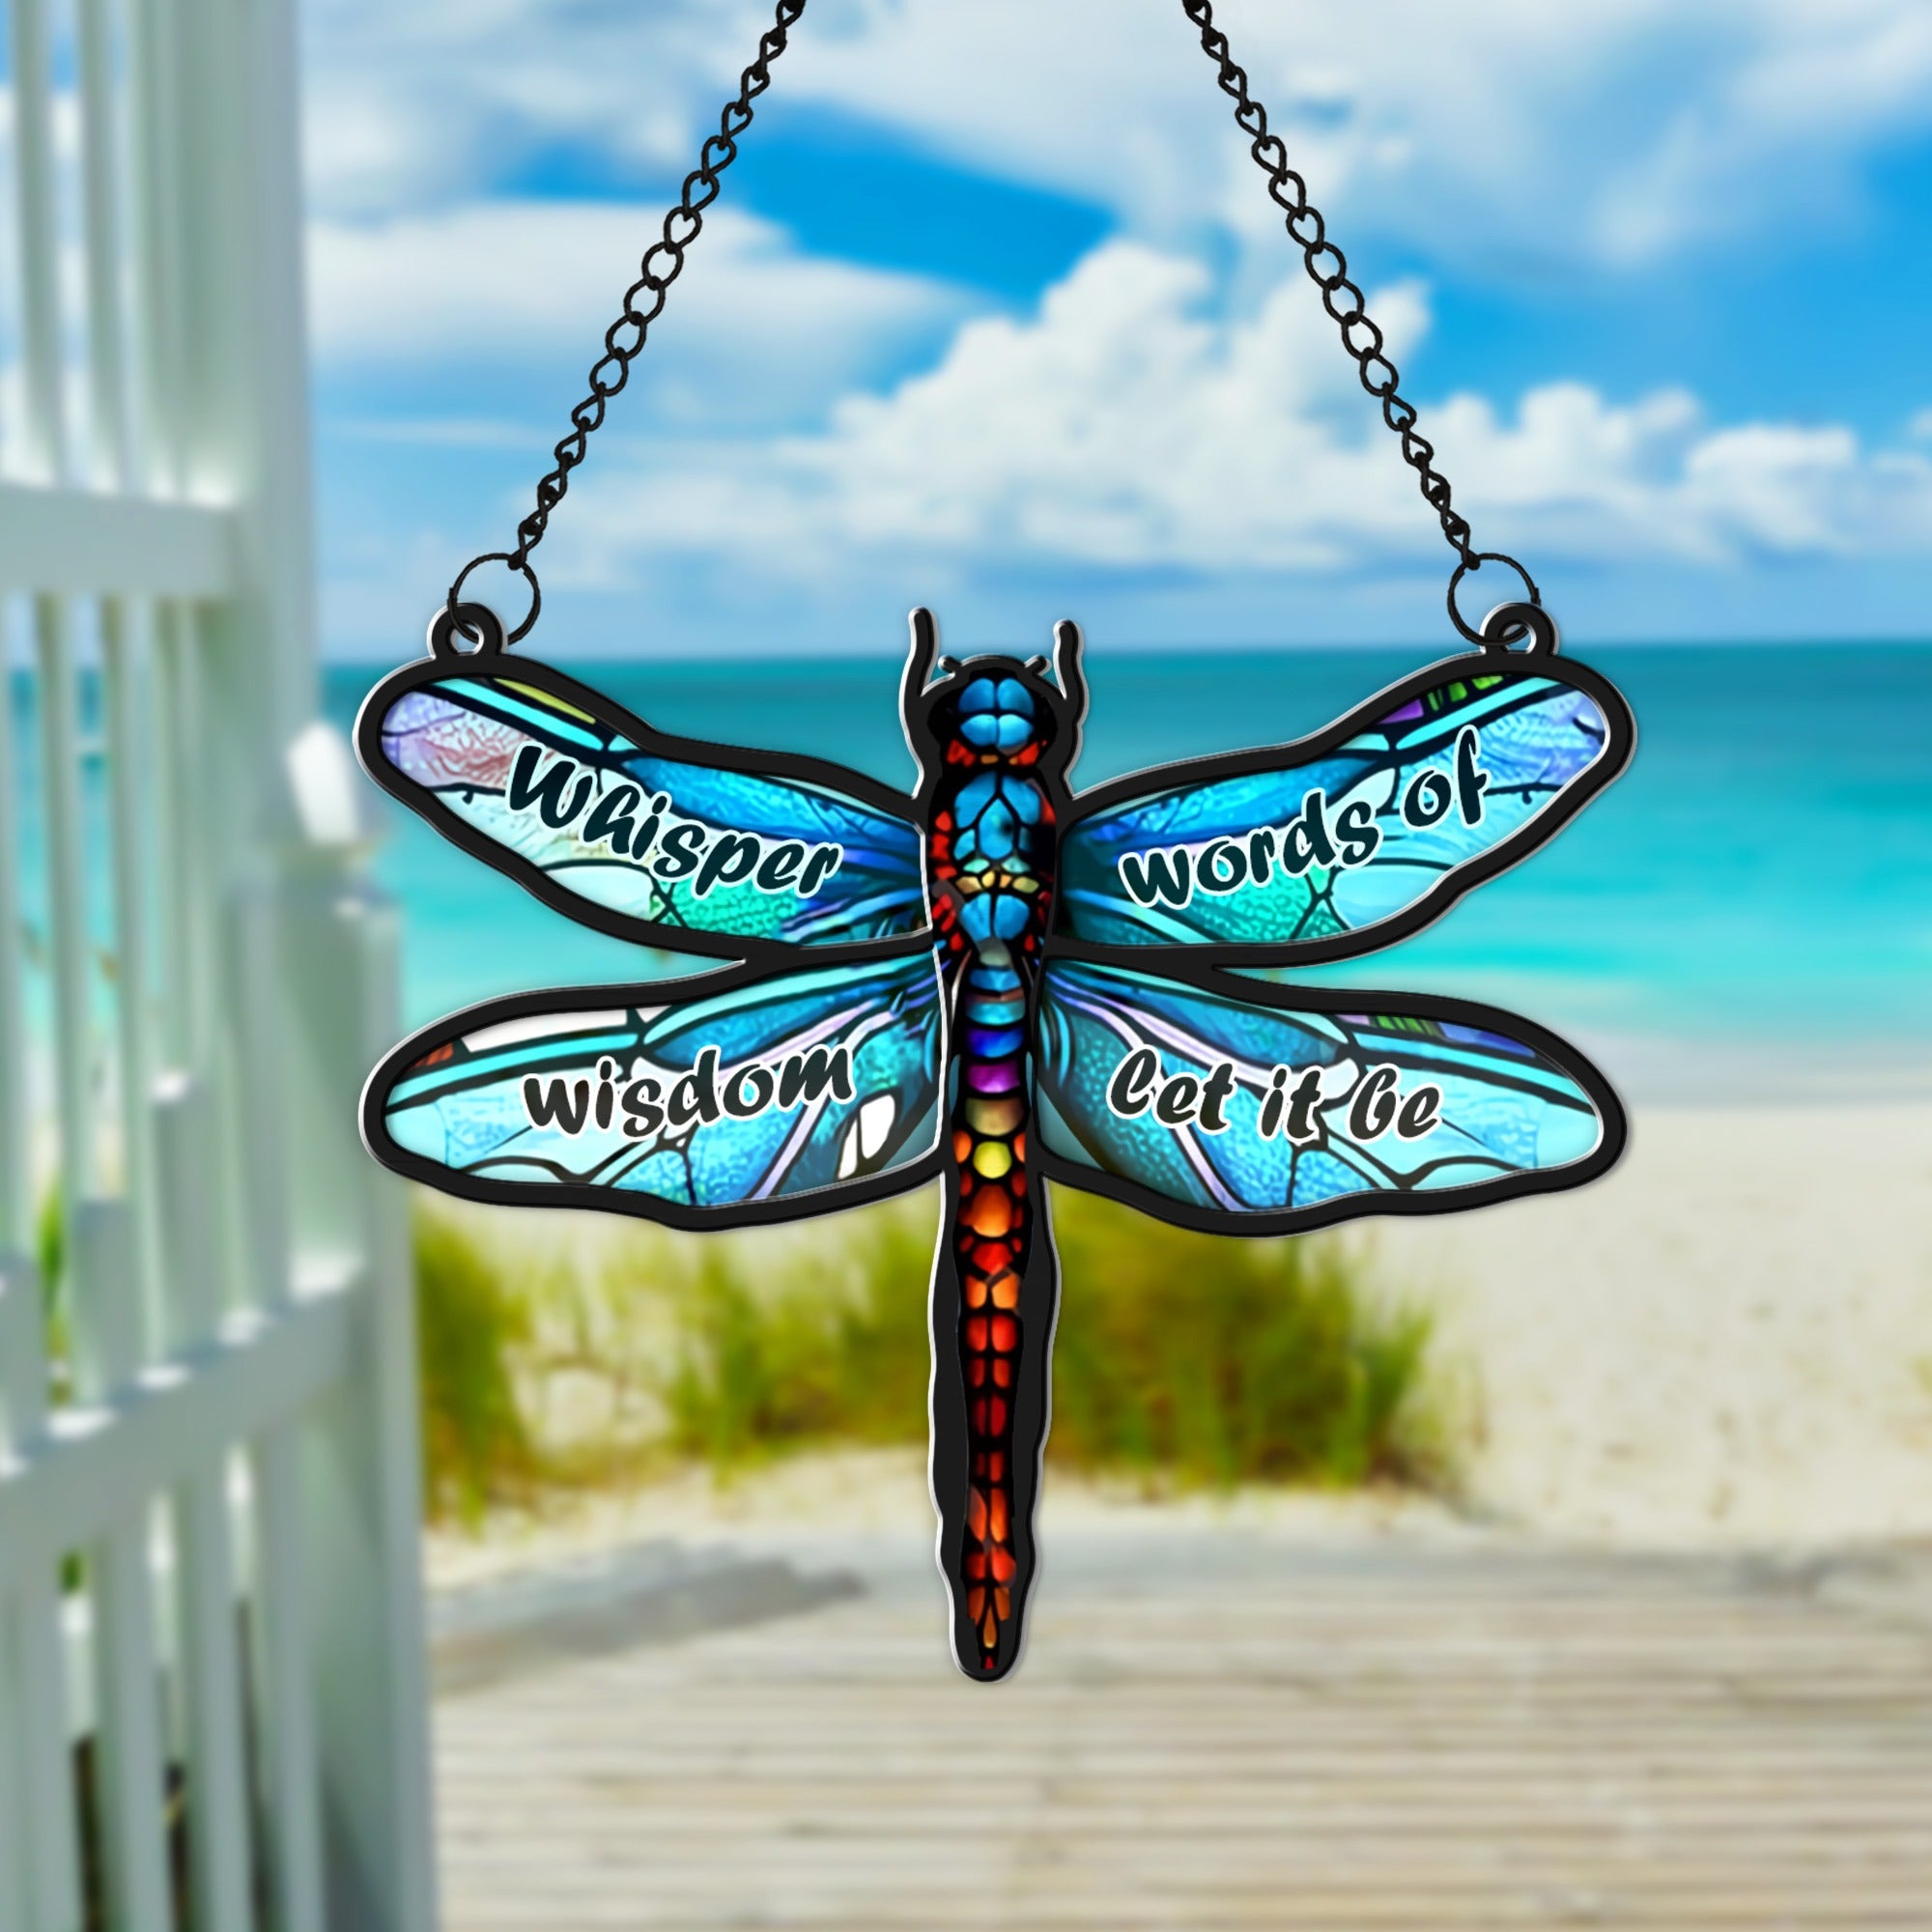 Whisper Words Of Wisdom Let It Be Dragonfly Hanging Suncatcher Ornament